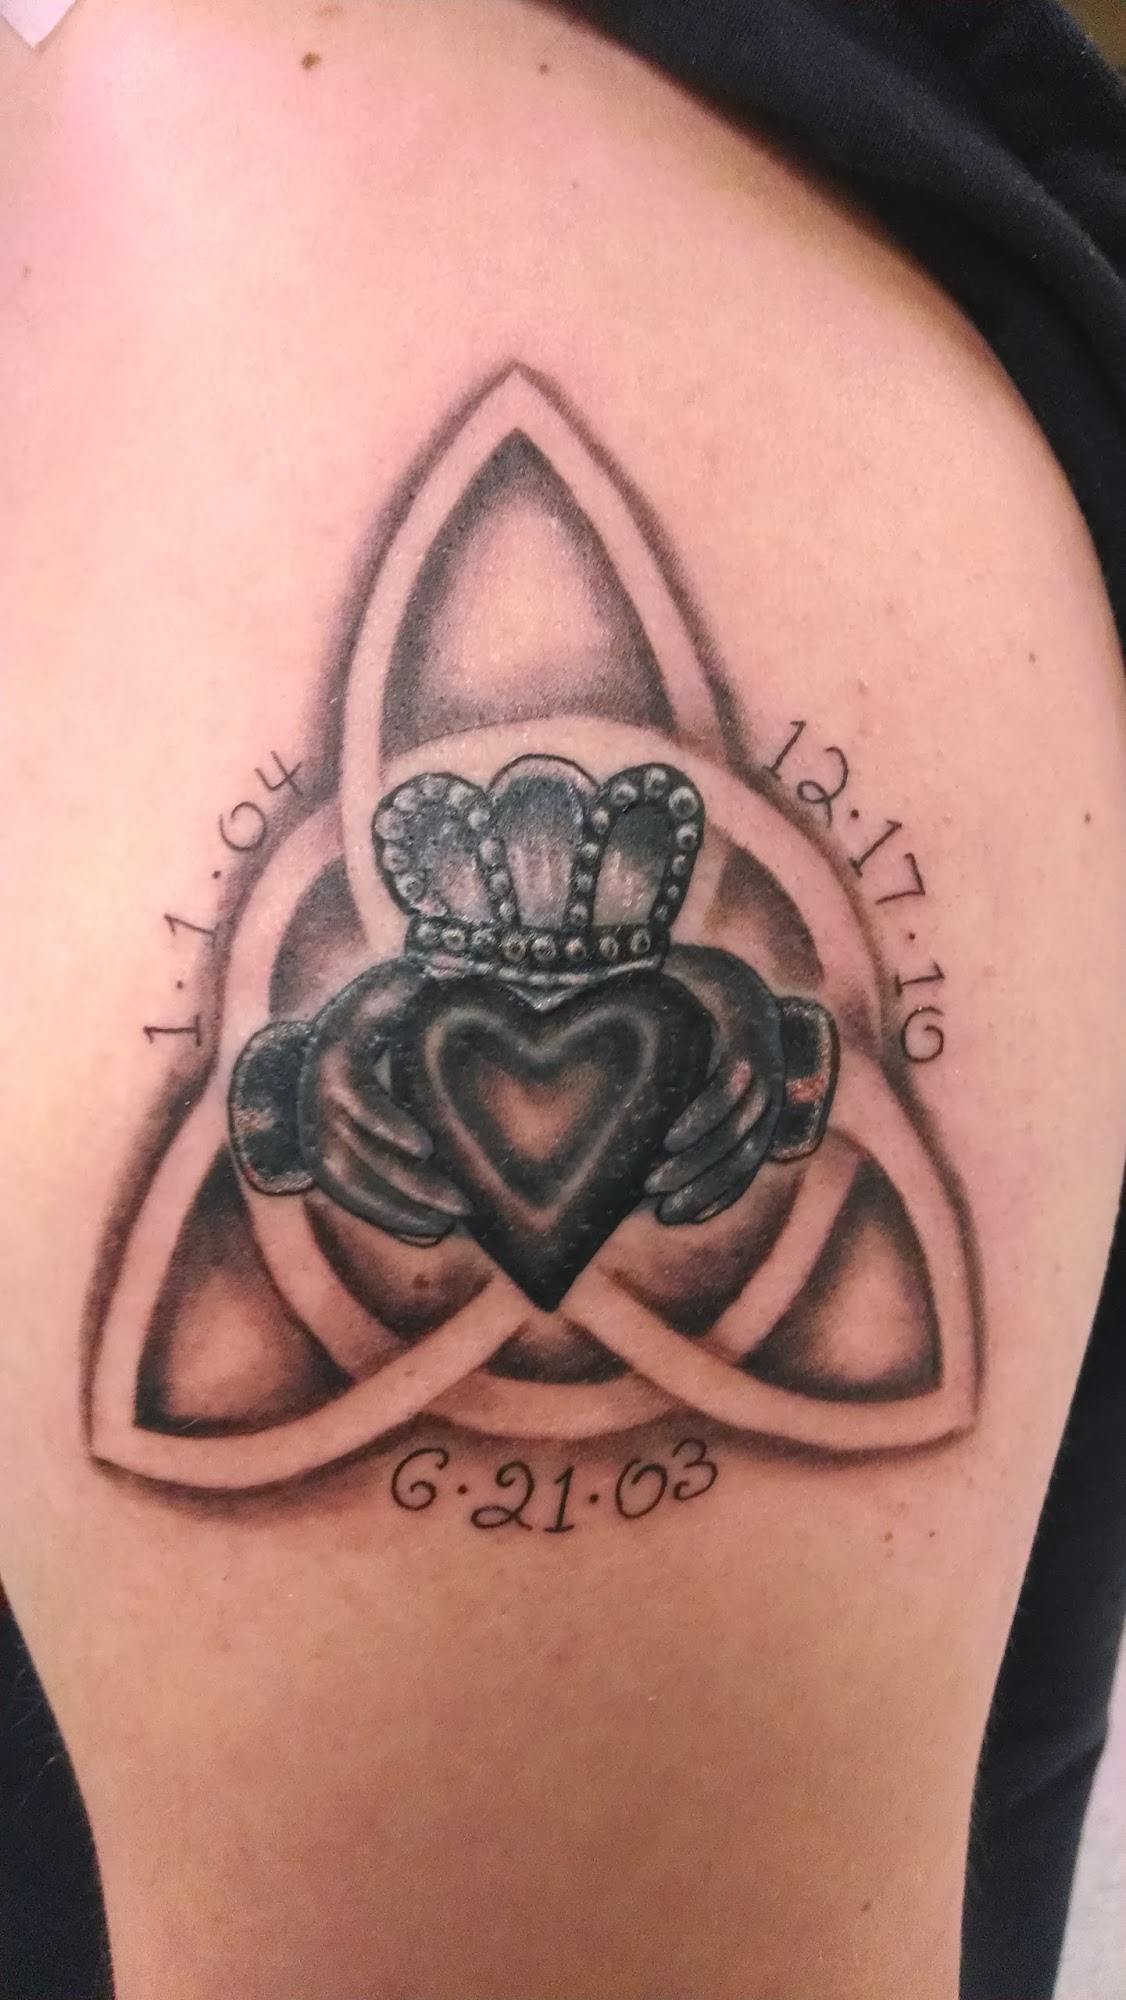 Shawn Horton Tattoo's 59 Portland Rd, Gray Maine 04039